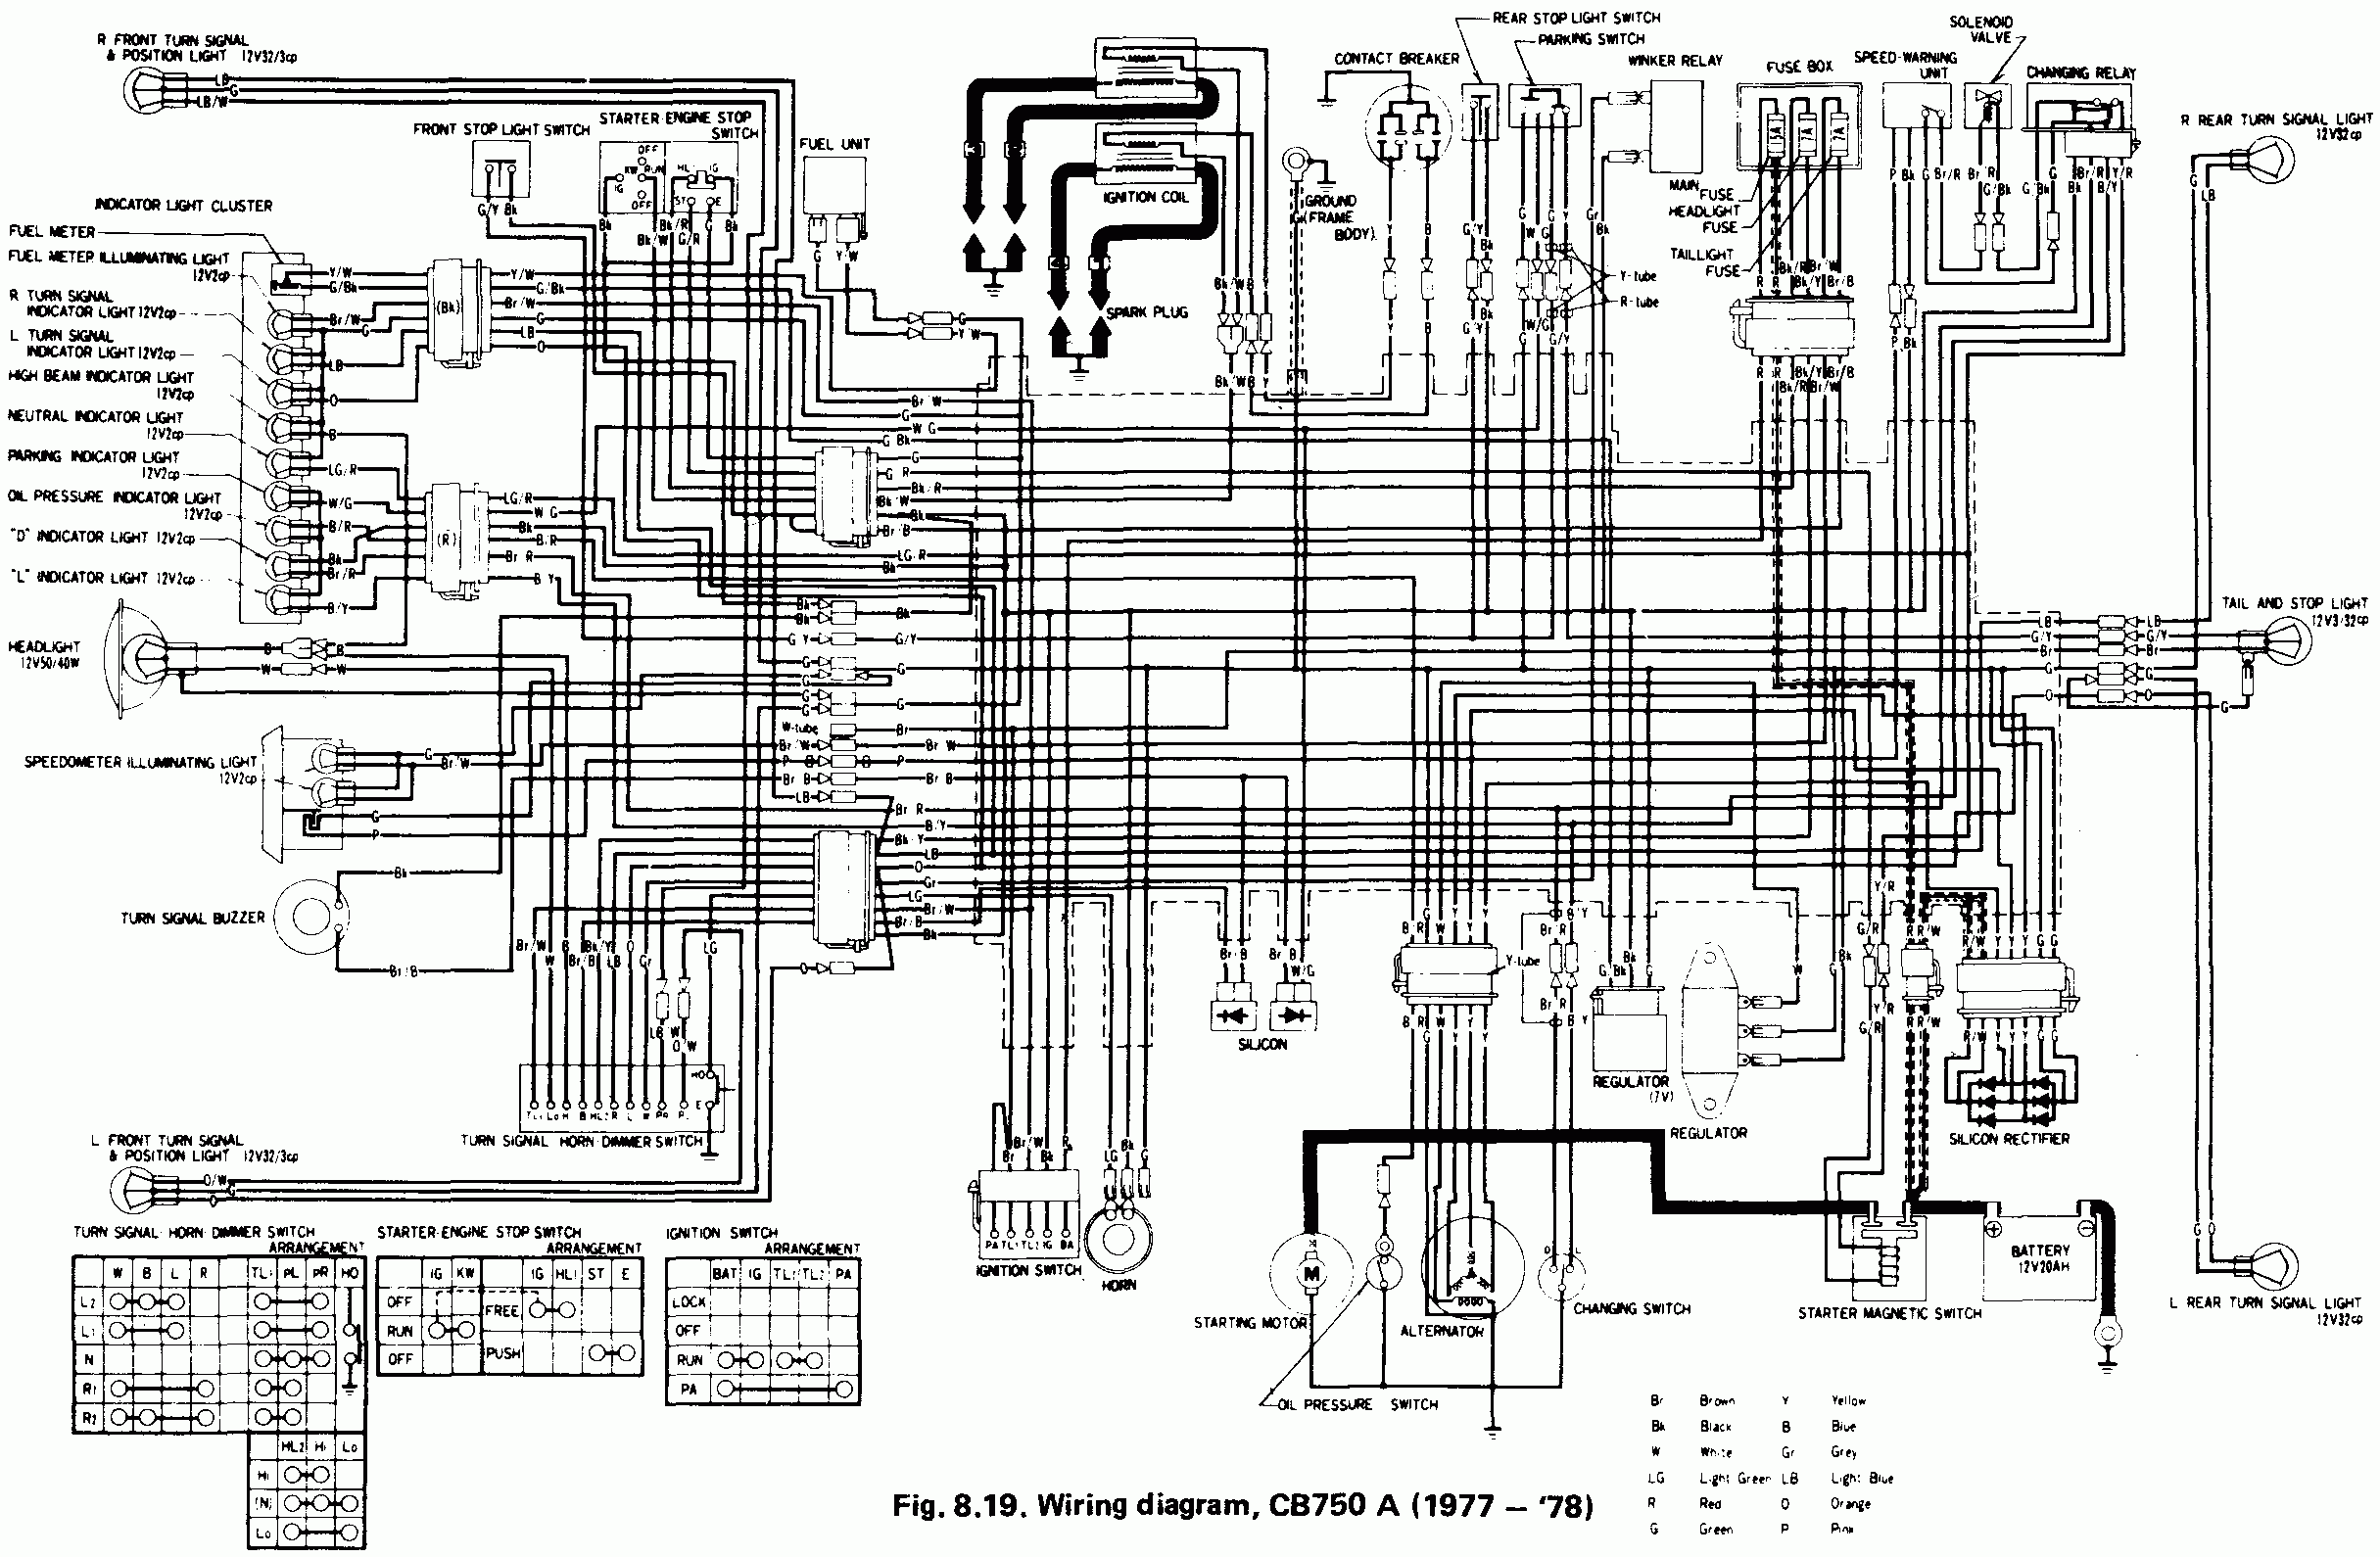 1984 Honda Vt500 Ascot Wiring Diagram Wiring Library